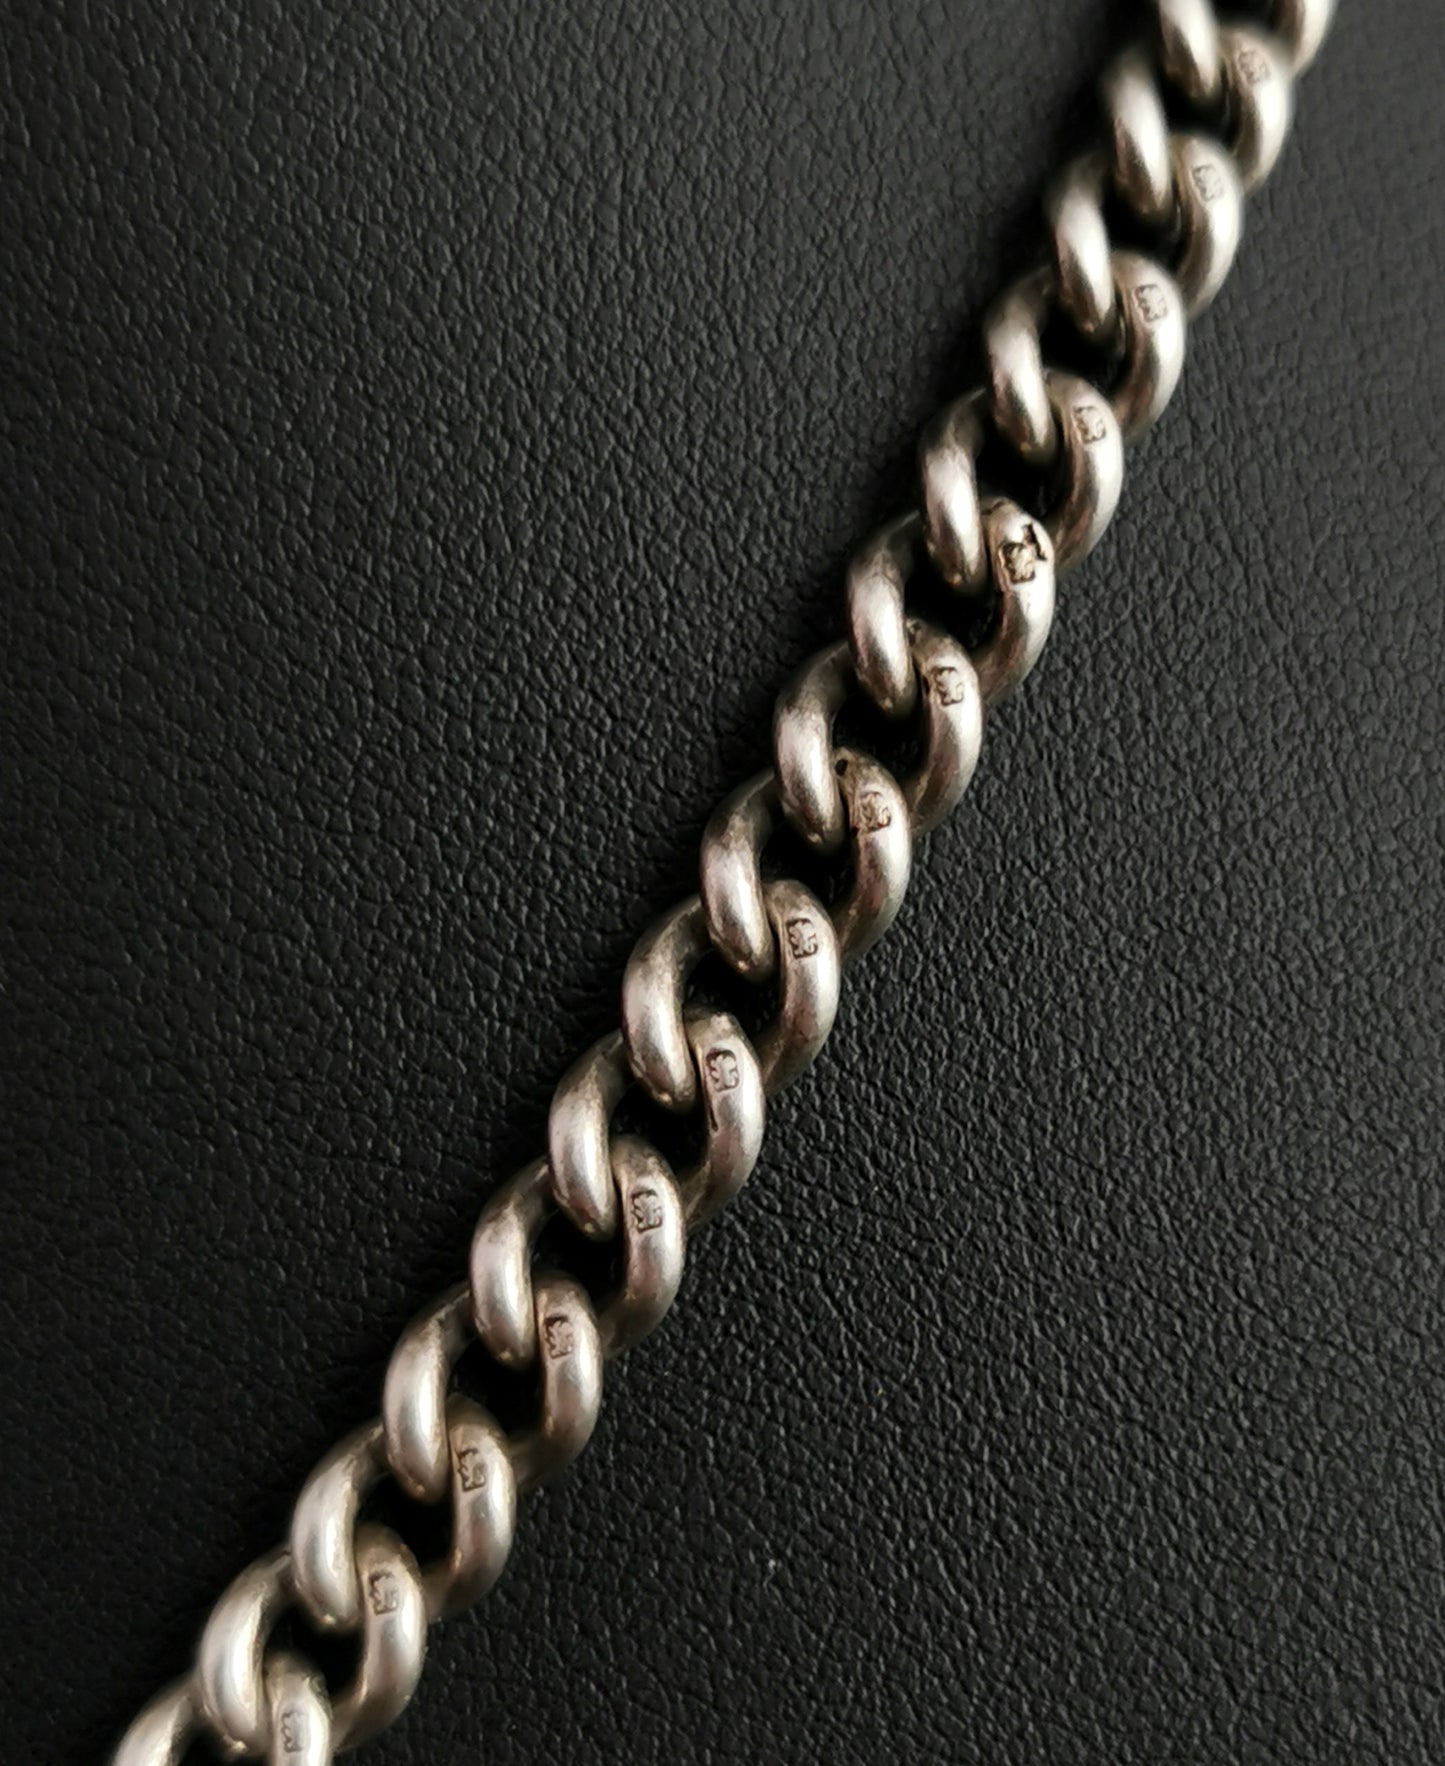 Antique Victorian silver Double Albert chain, watch chain, fob